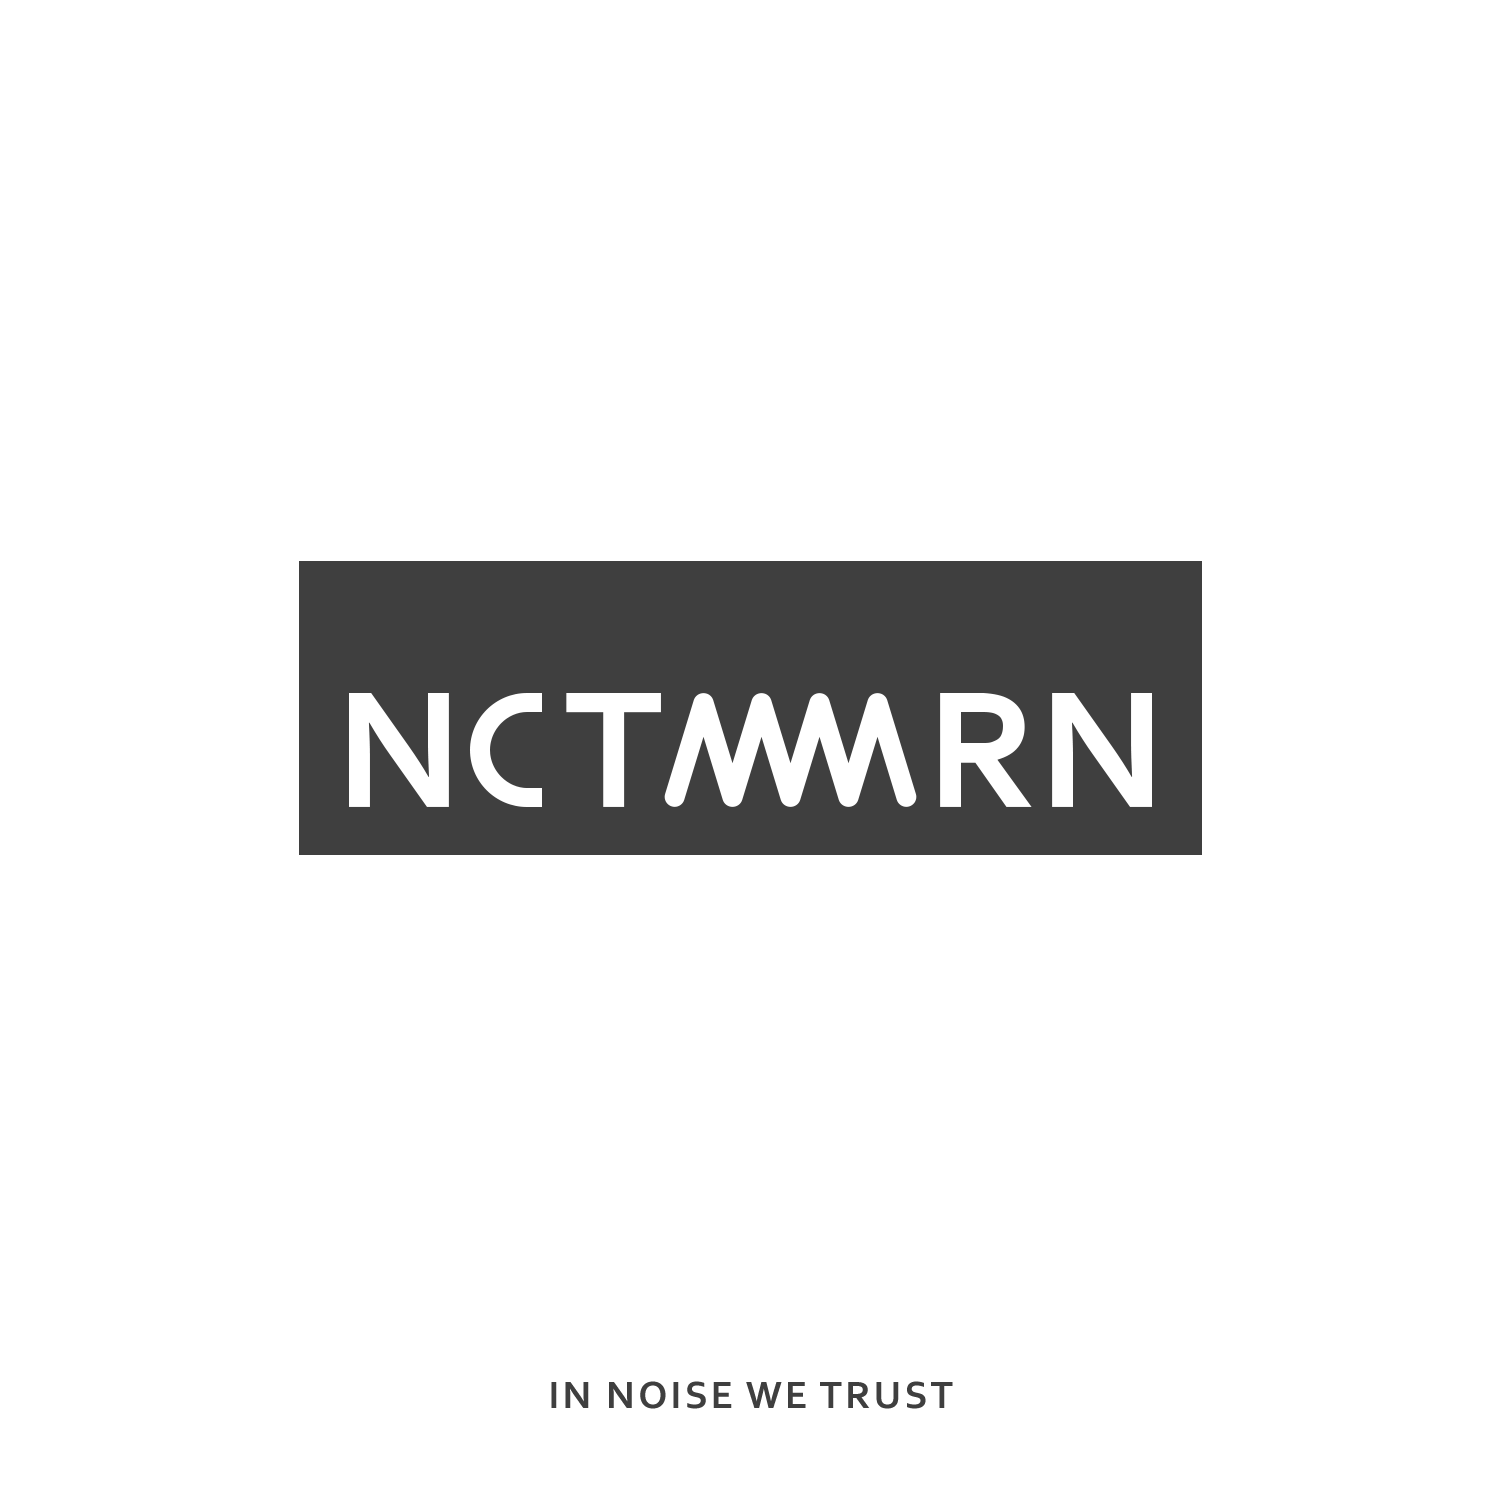 NCTMMRN logo